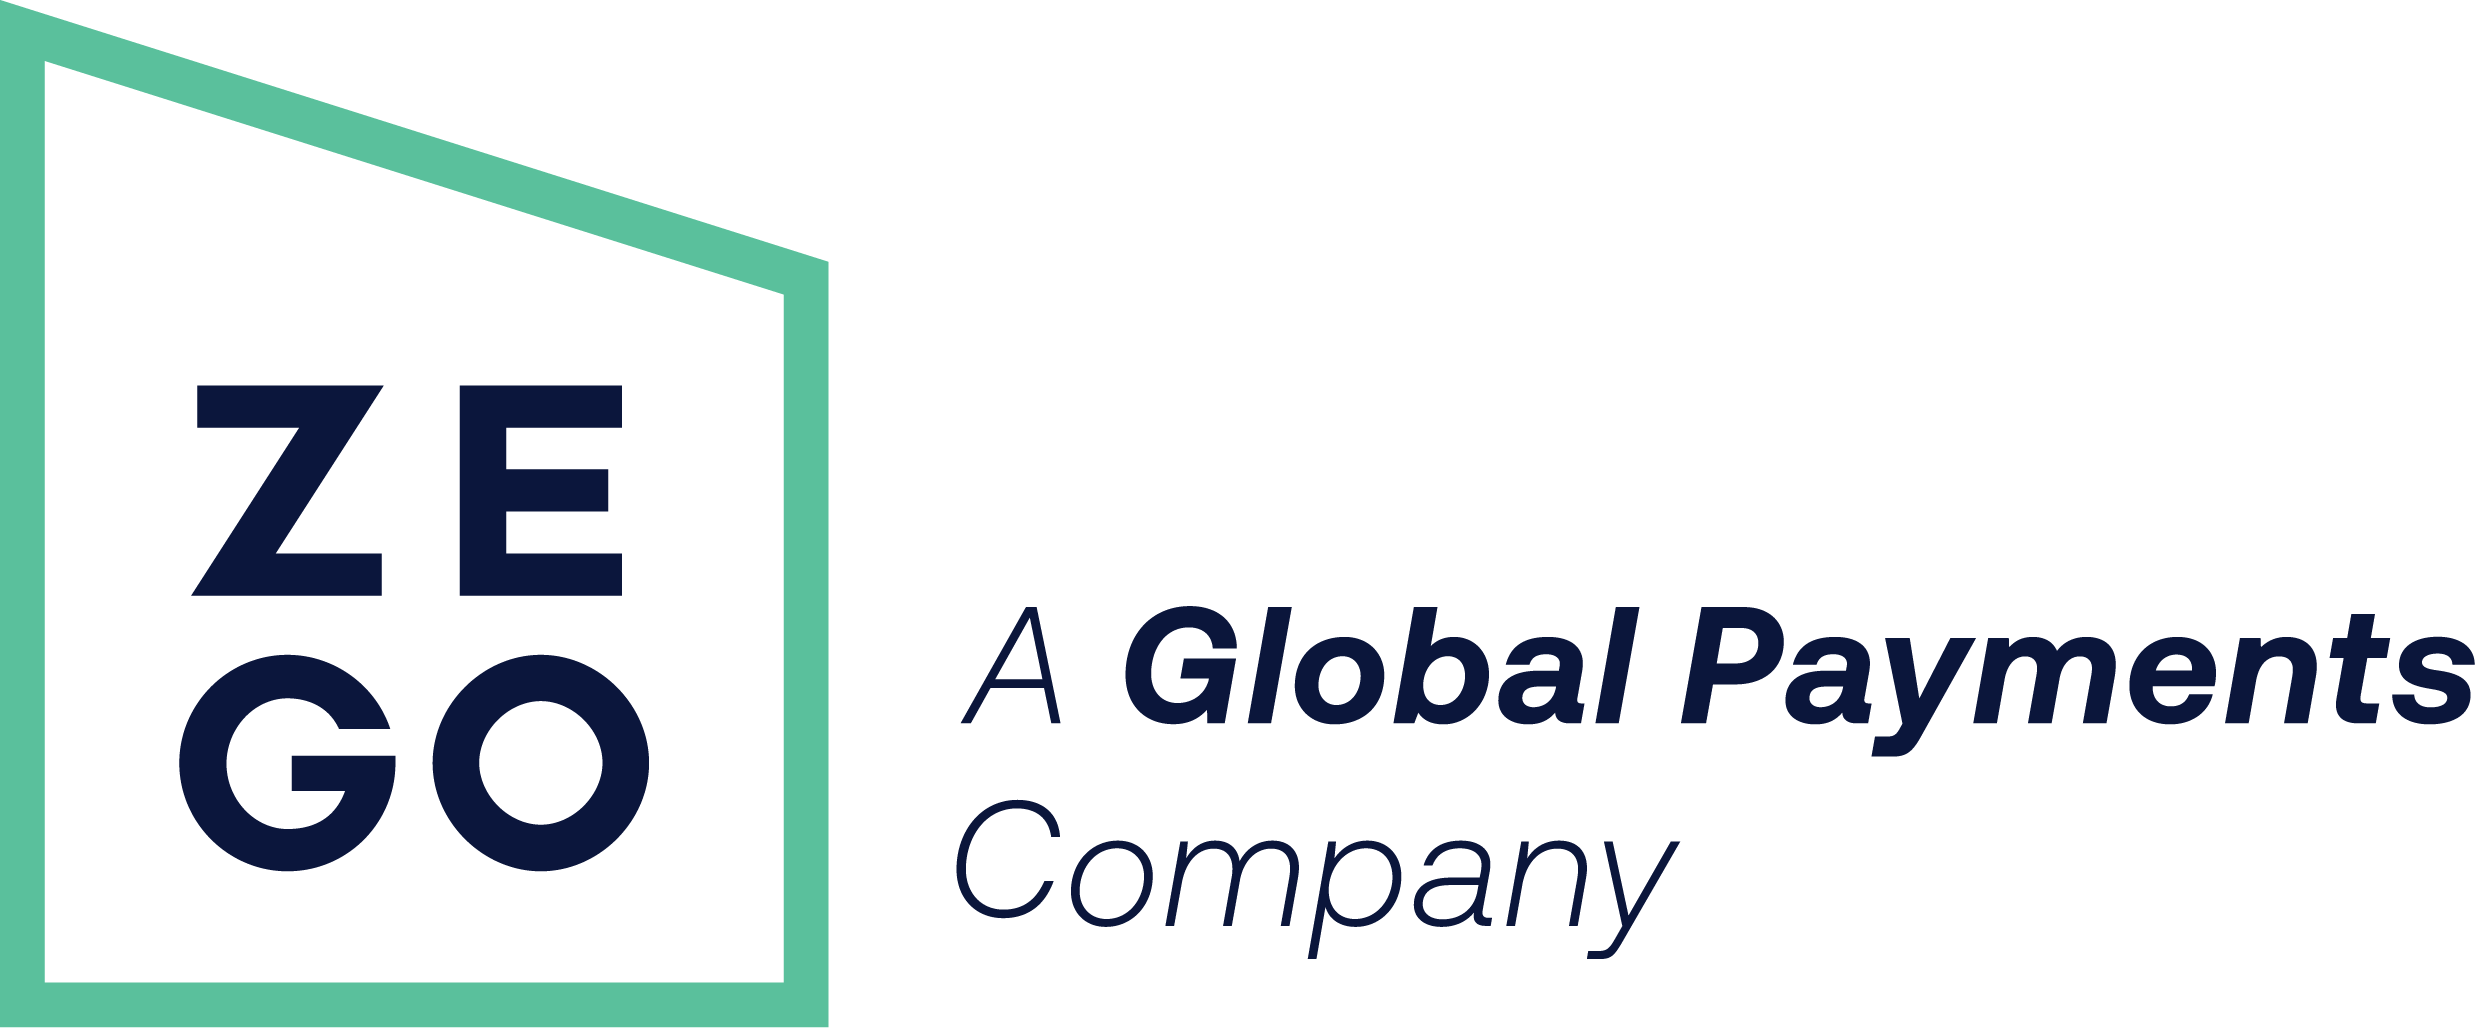 Zego A Global Payments Company Logo